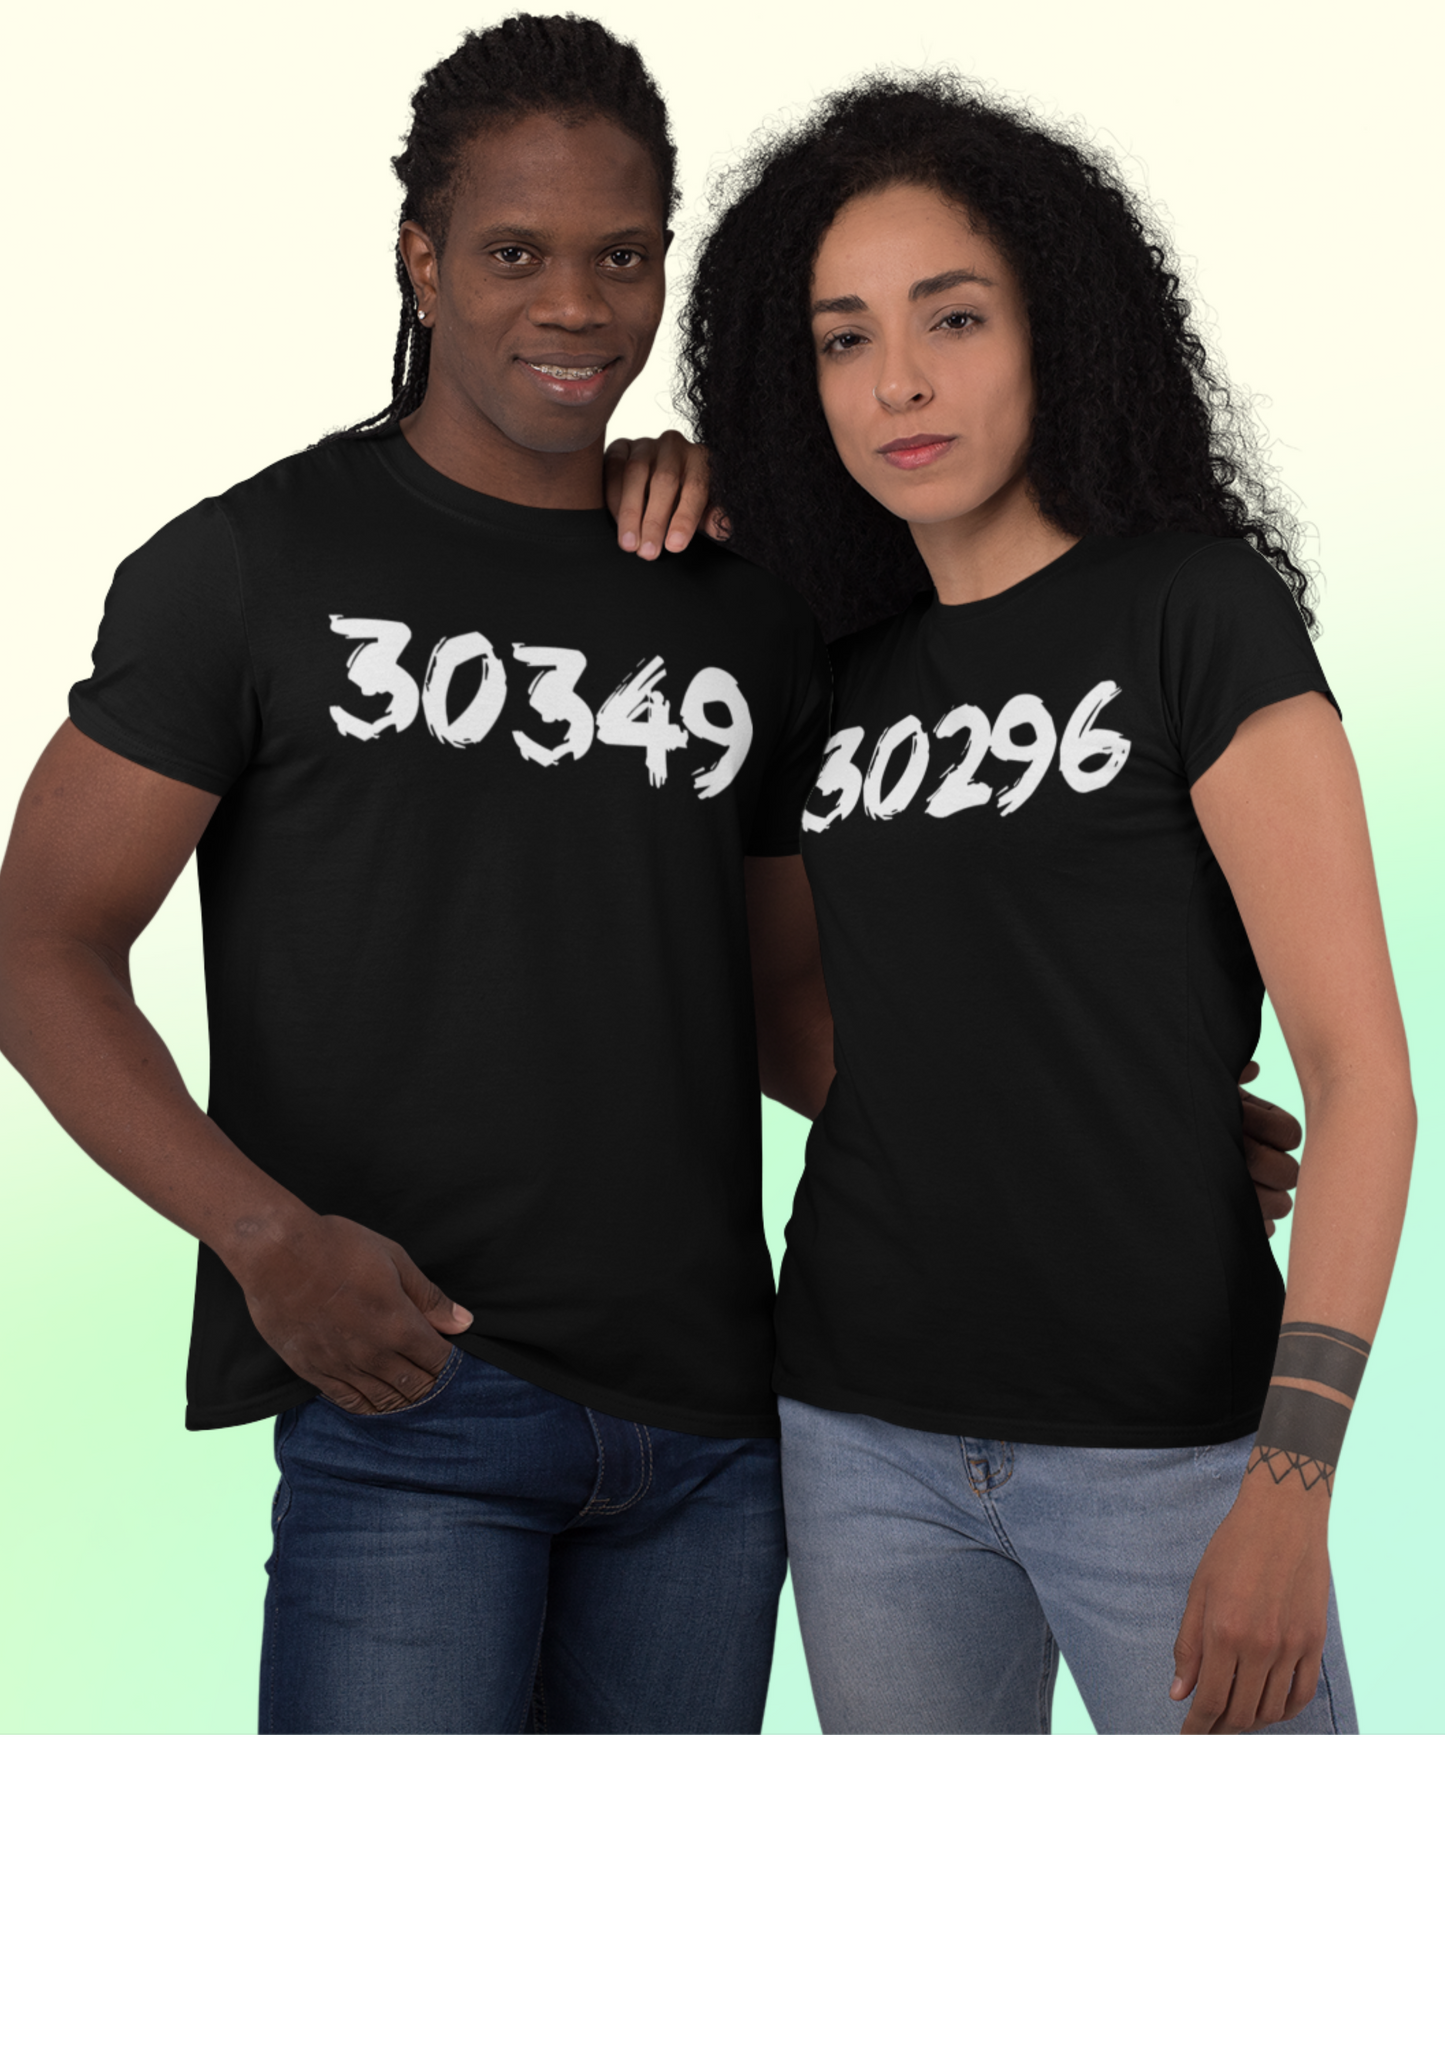 Rep Your City - Custom Zip Code Shirts